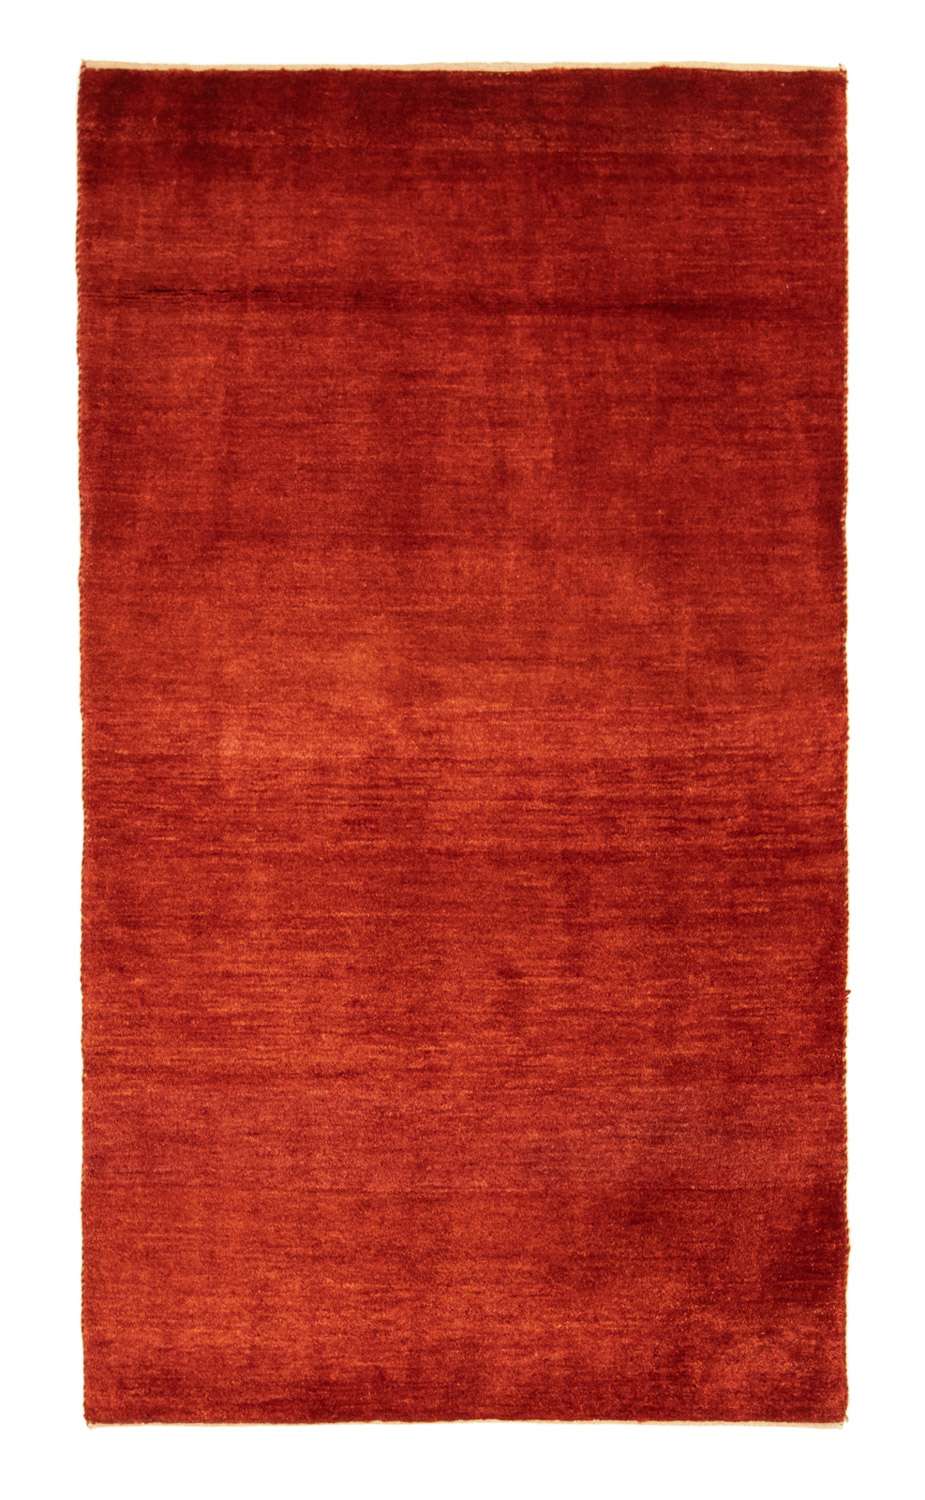 Gabbeh Rug - Perser - 188 x 108 cm - red